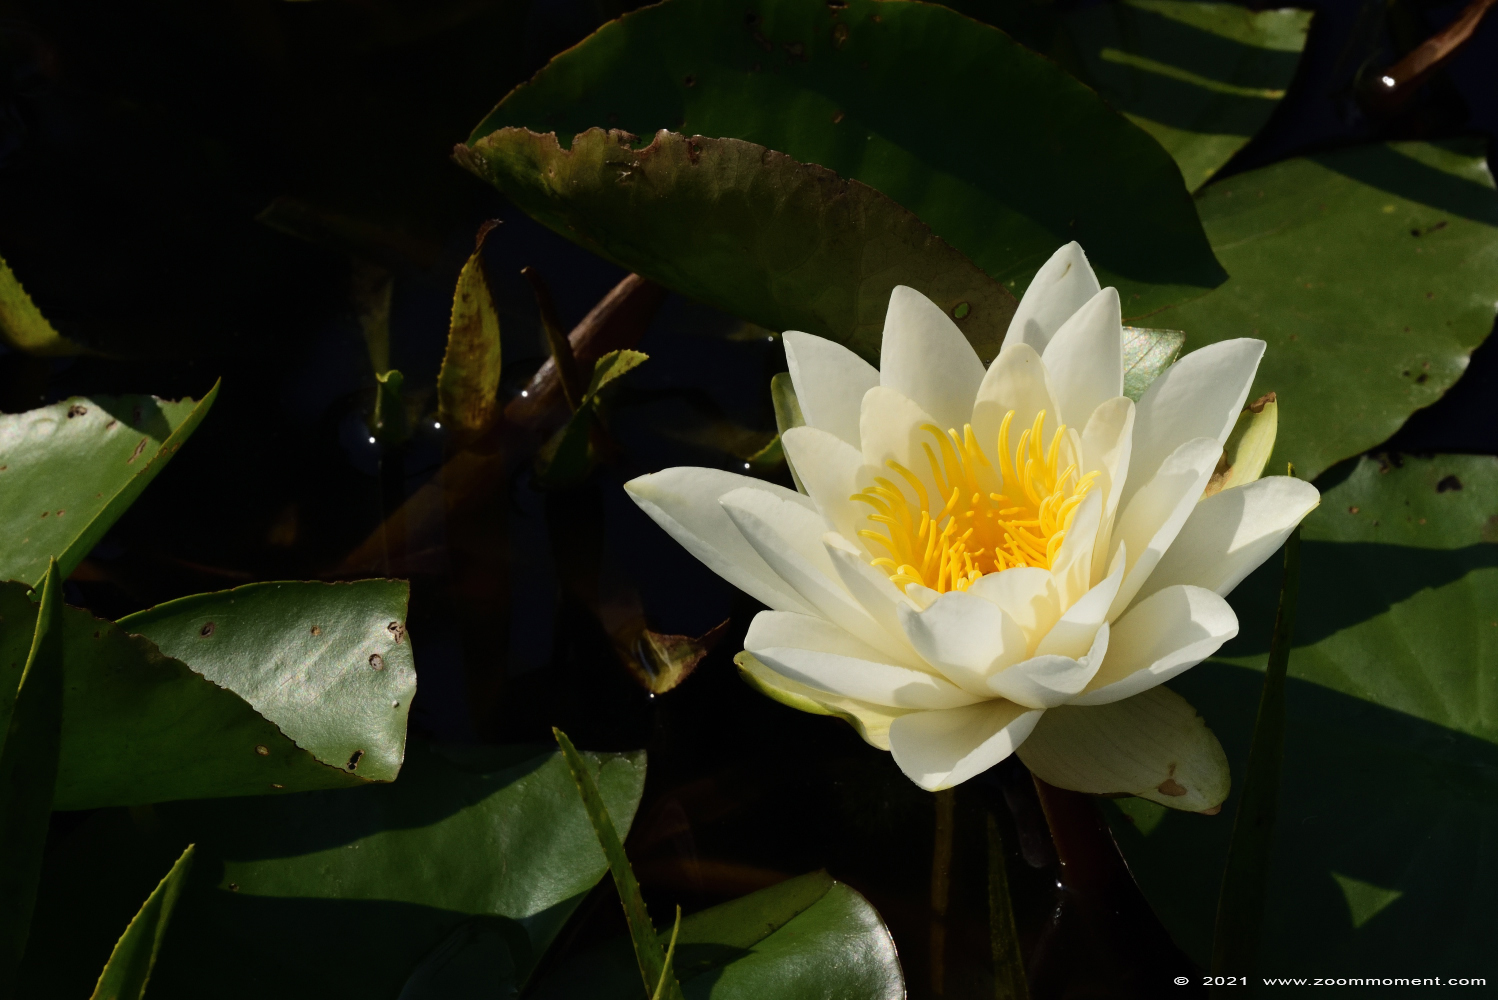 waterlelie water lily
Trefwoorden: Ziezoo Volkel Nederland waterlelie water lily